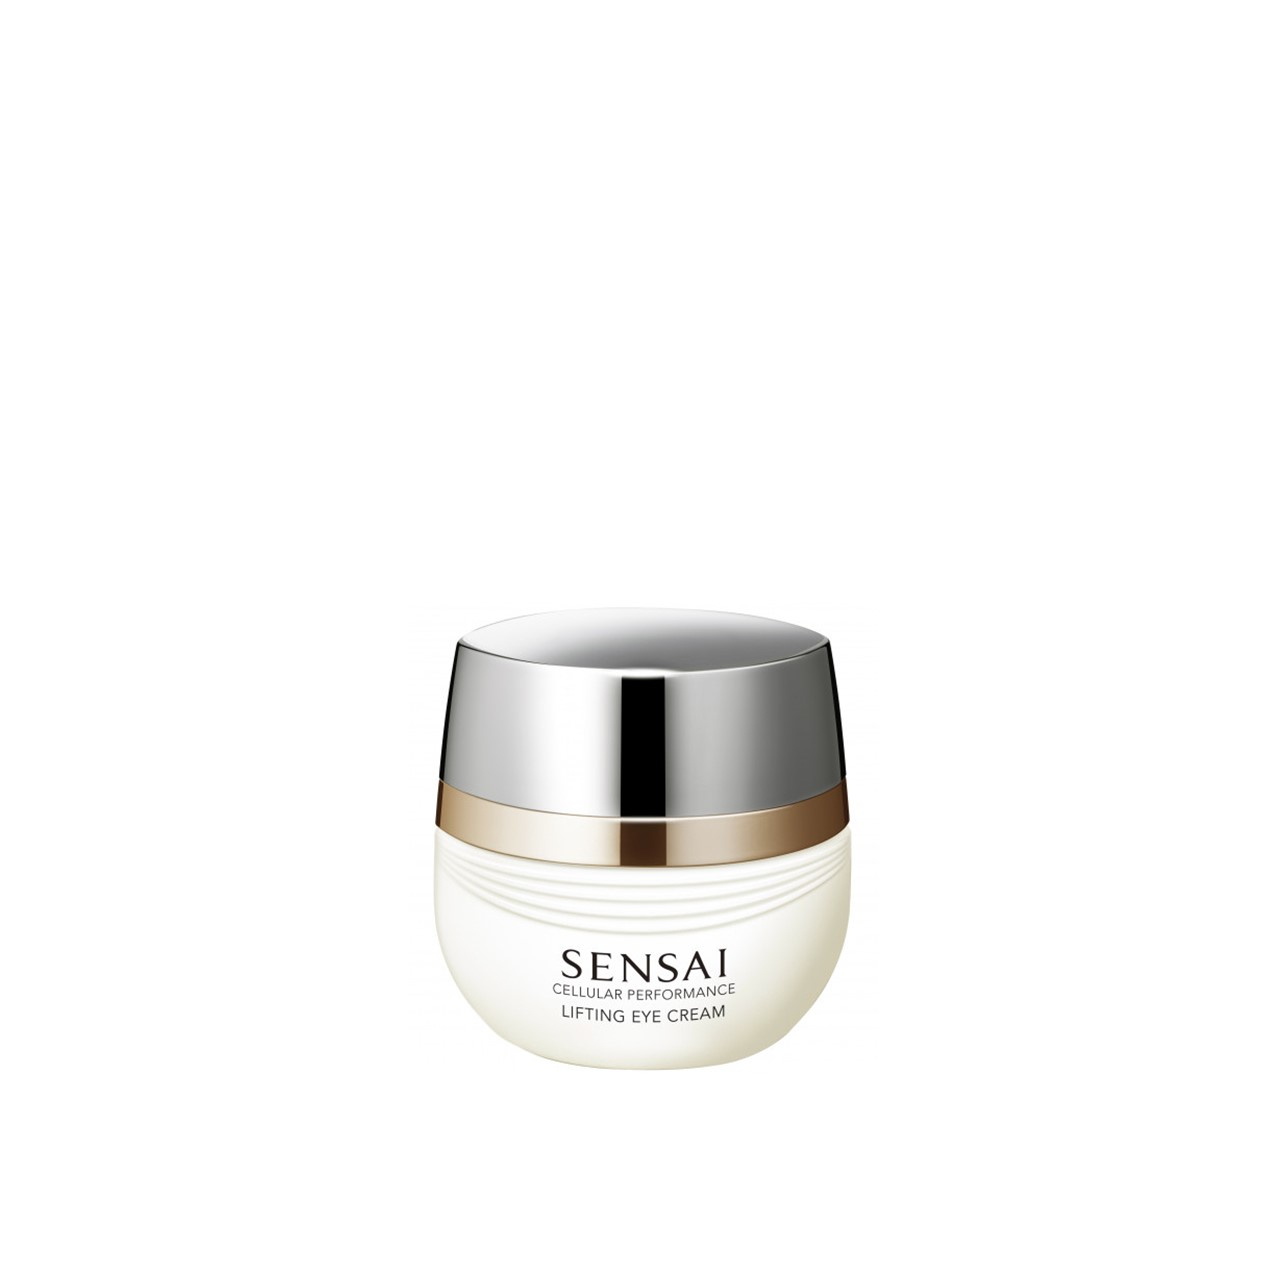 SENSAI Cellular Performance Lifting Eye Cream 15ml (0.52 oz)